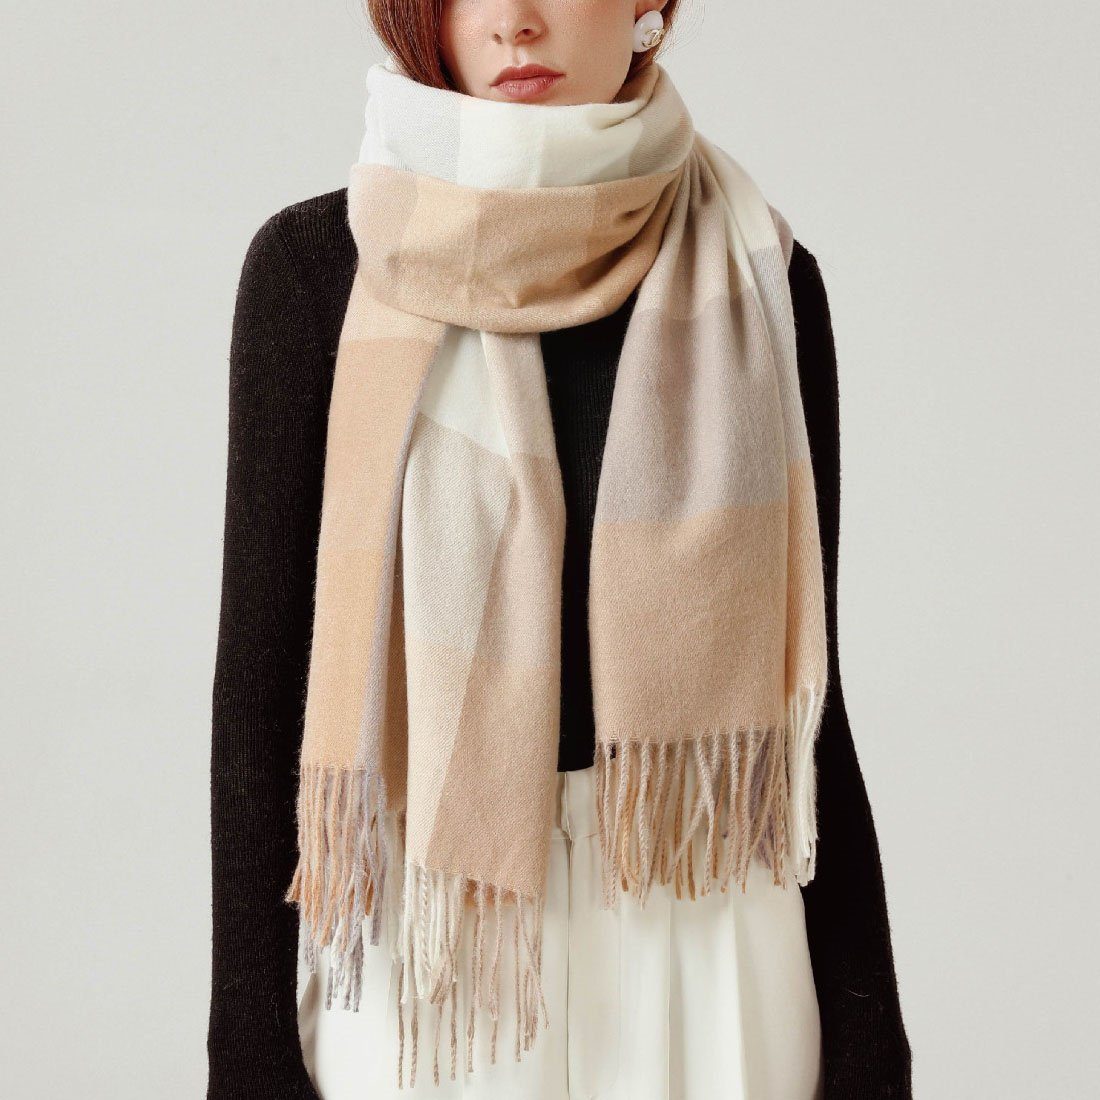 DÖRÖY Modeschal Damen Vintage Schal, Rosa quadratischen Warm Schal gestreiften Winter